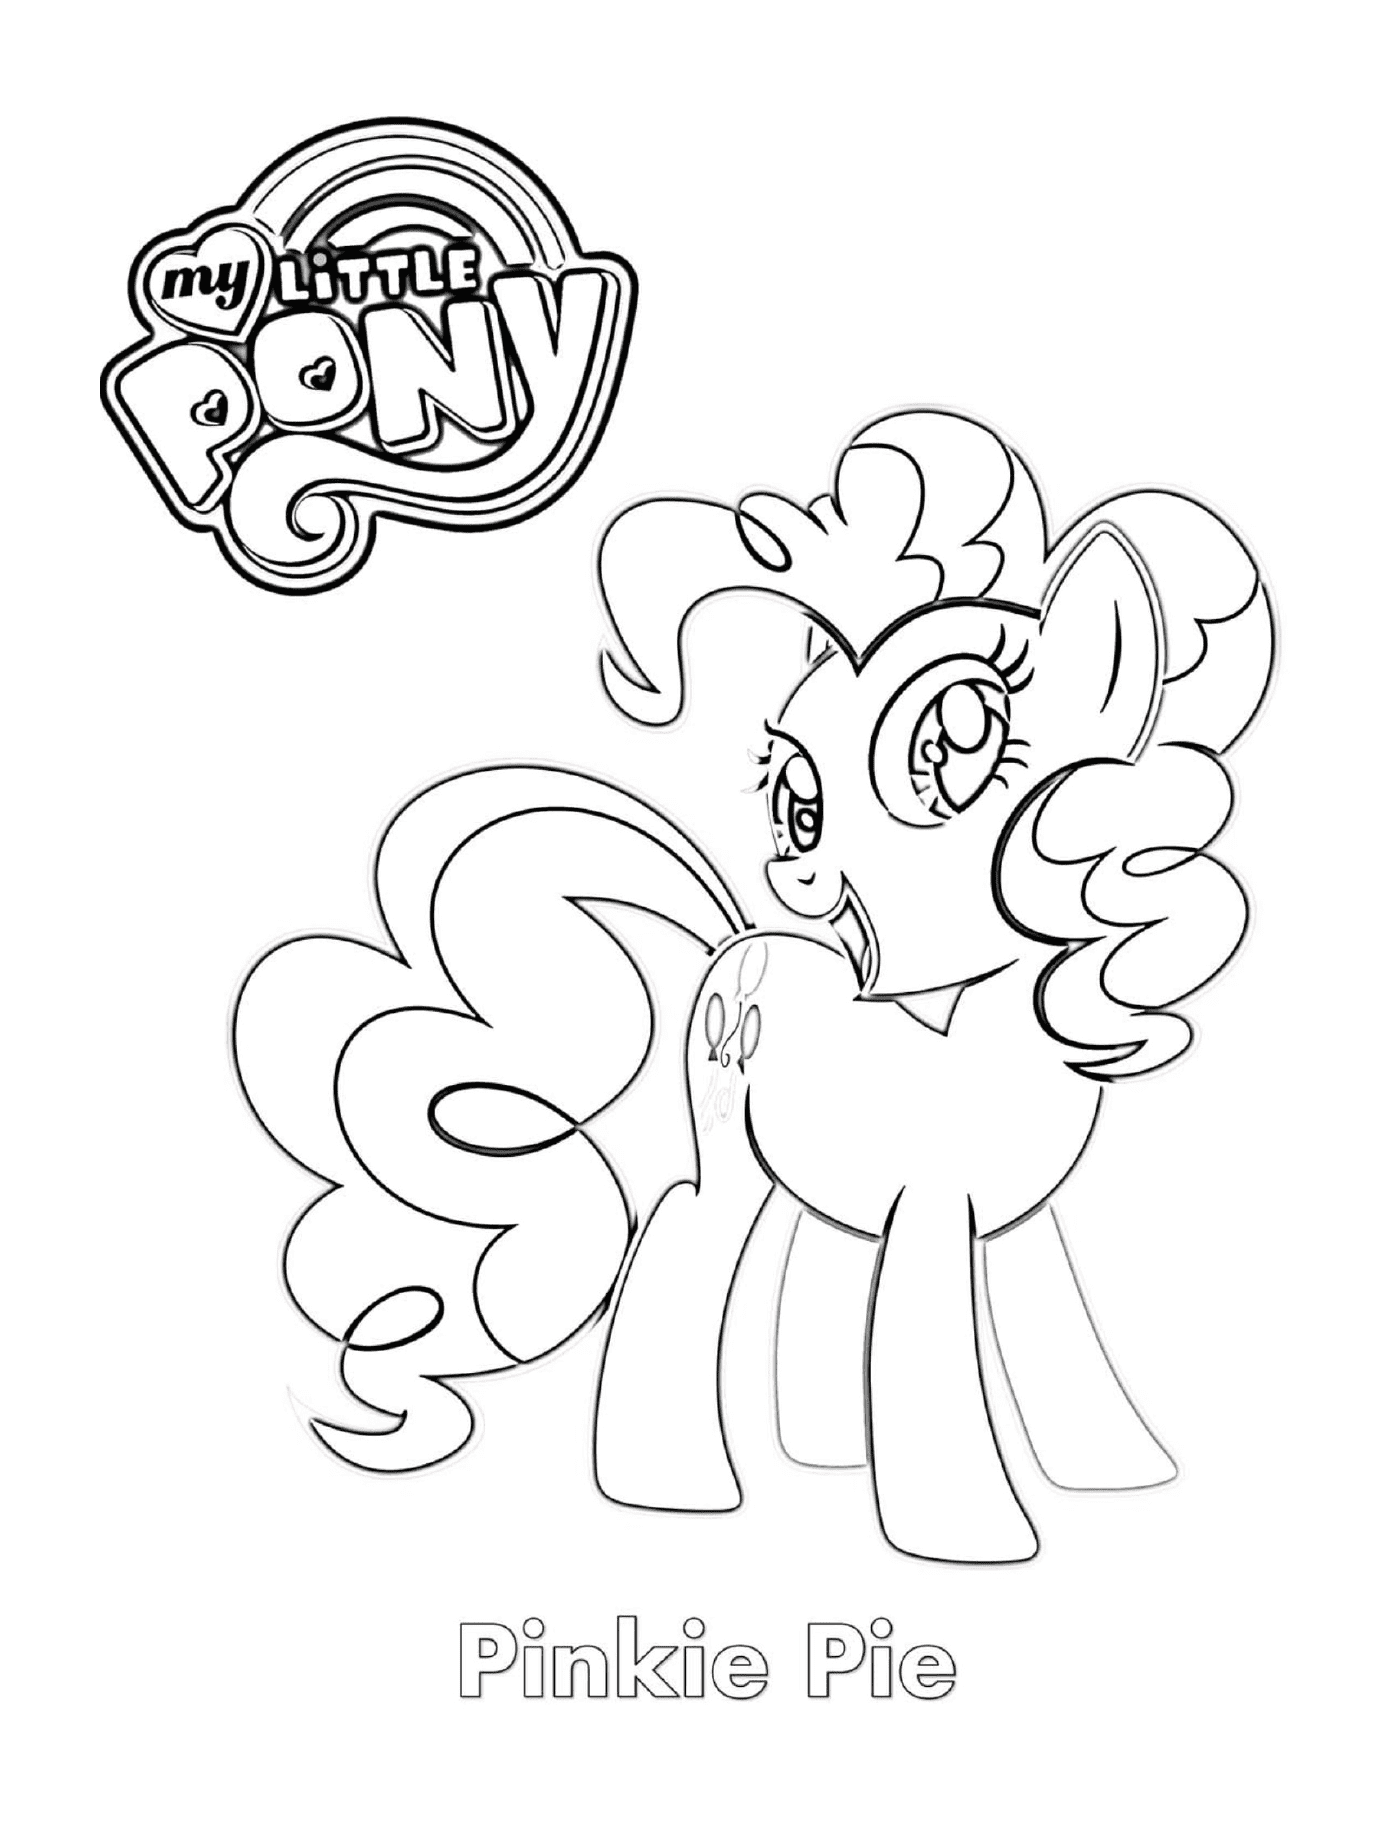  Pinkie Pie, un pony lindo 